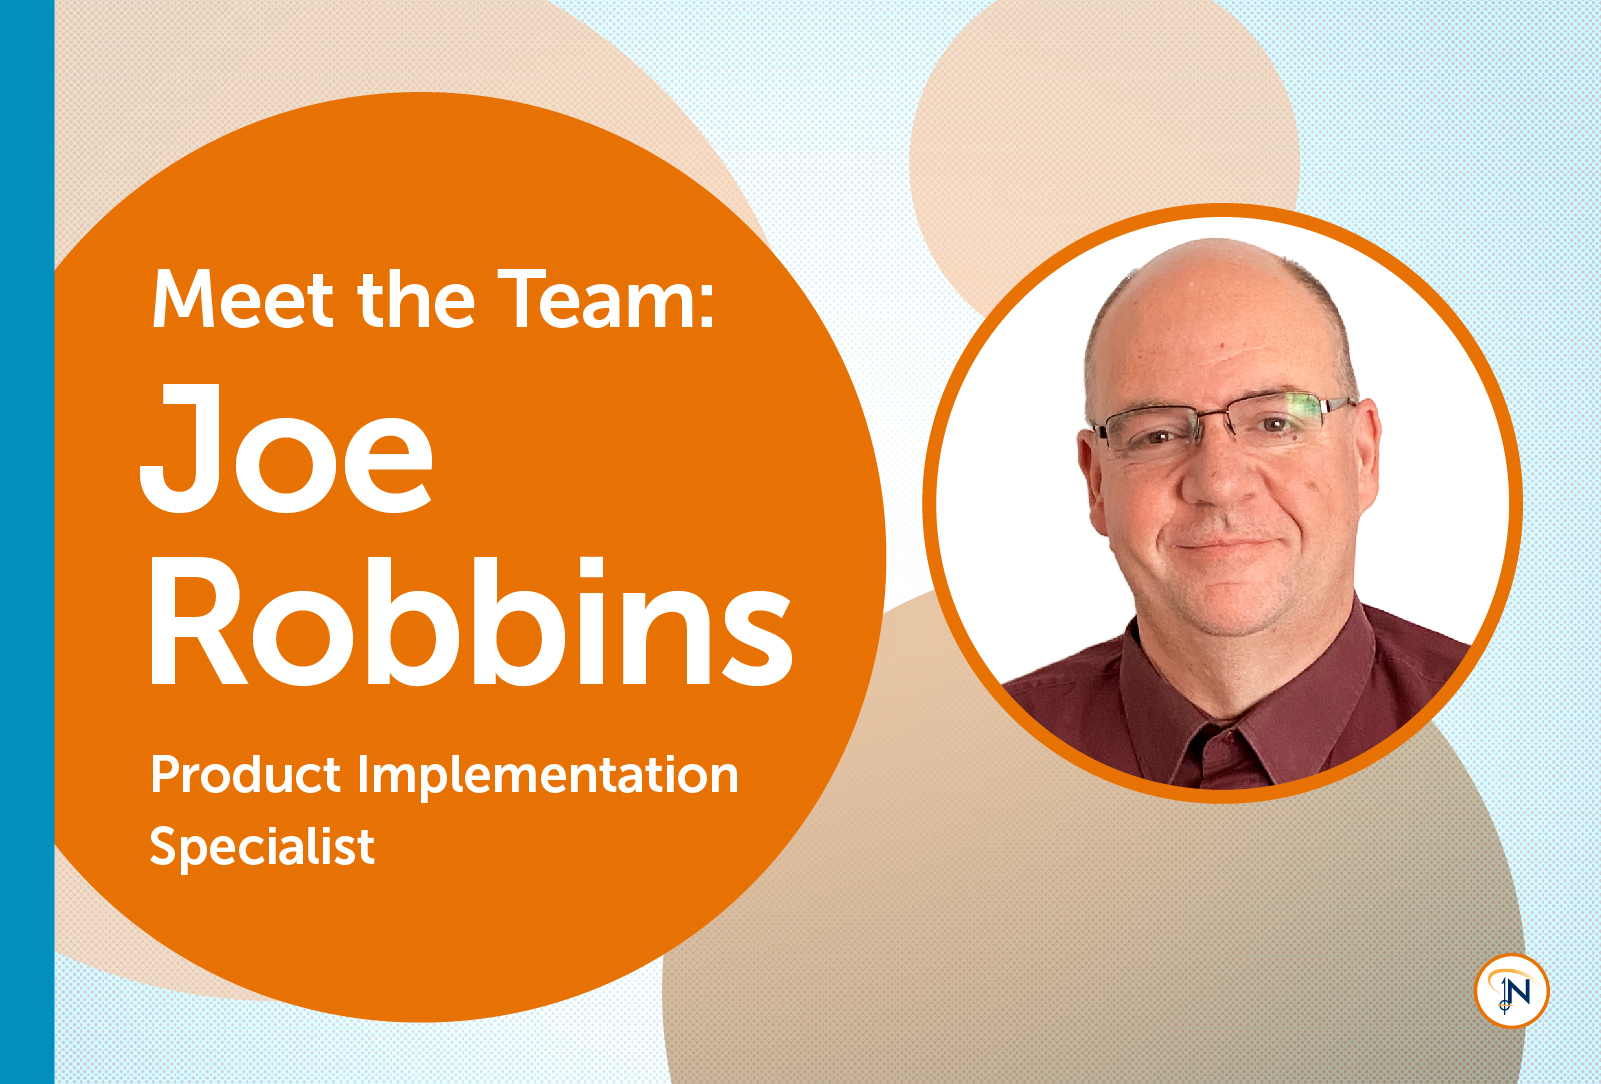 Meet the Team: Joe Robbins